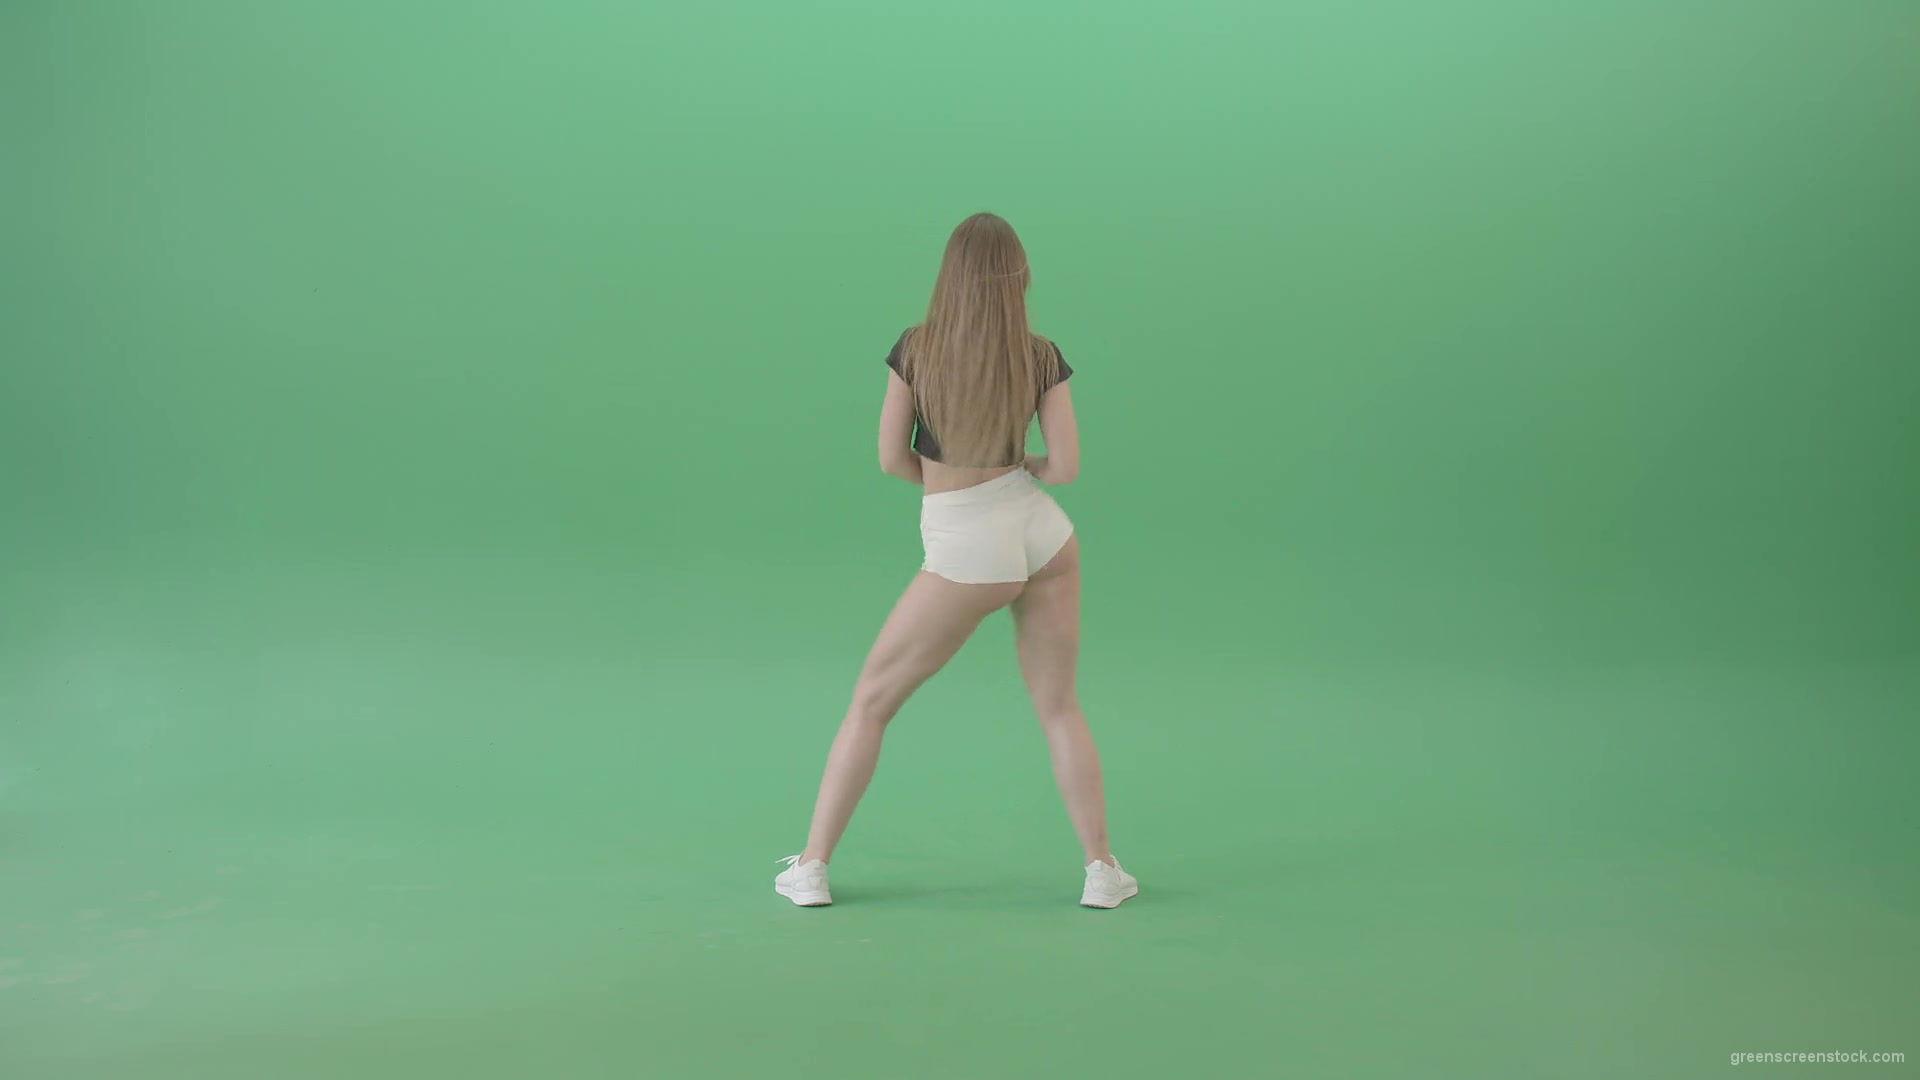 Amazing-girl-making-dancing-infinity-looping-element-twerking-hips-isolated-on-Green-Screen-4K-Video-Footage-1920_004 Green Screen Stock